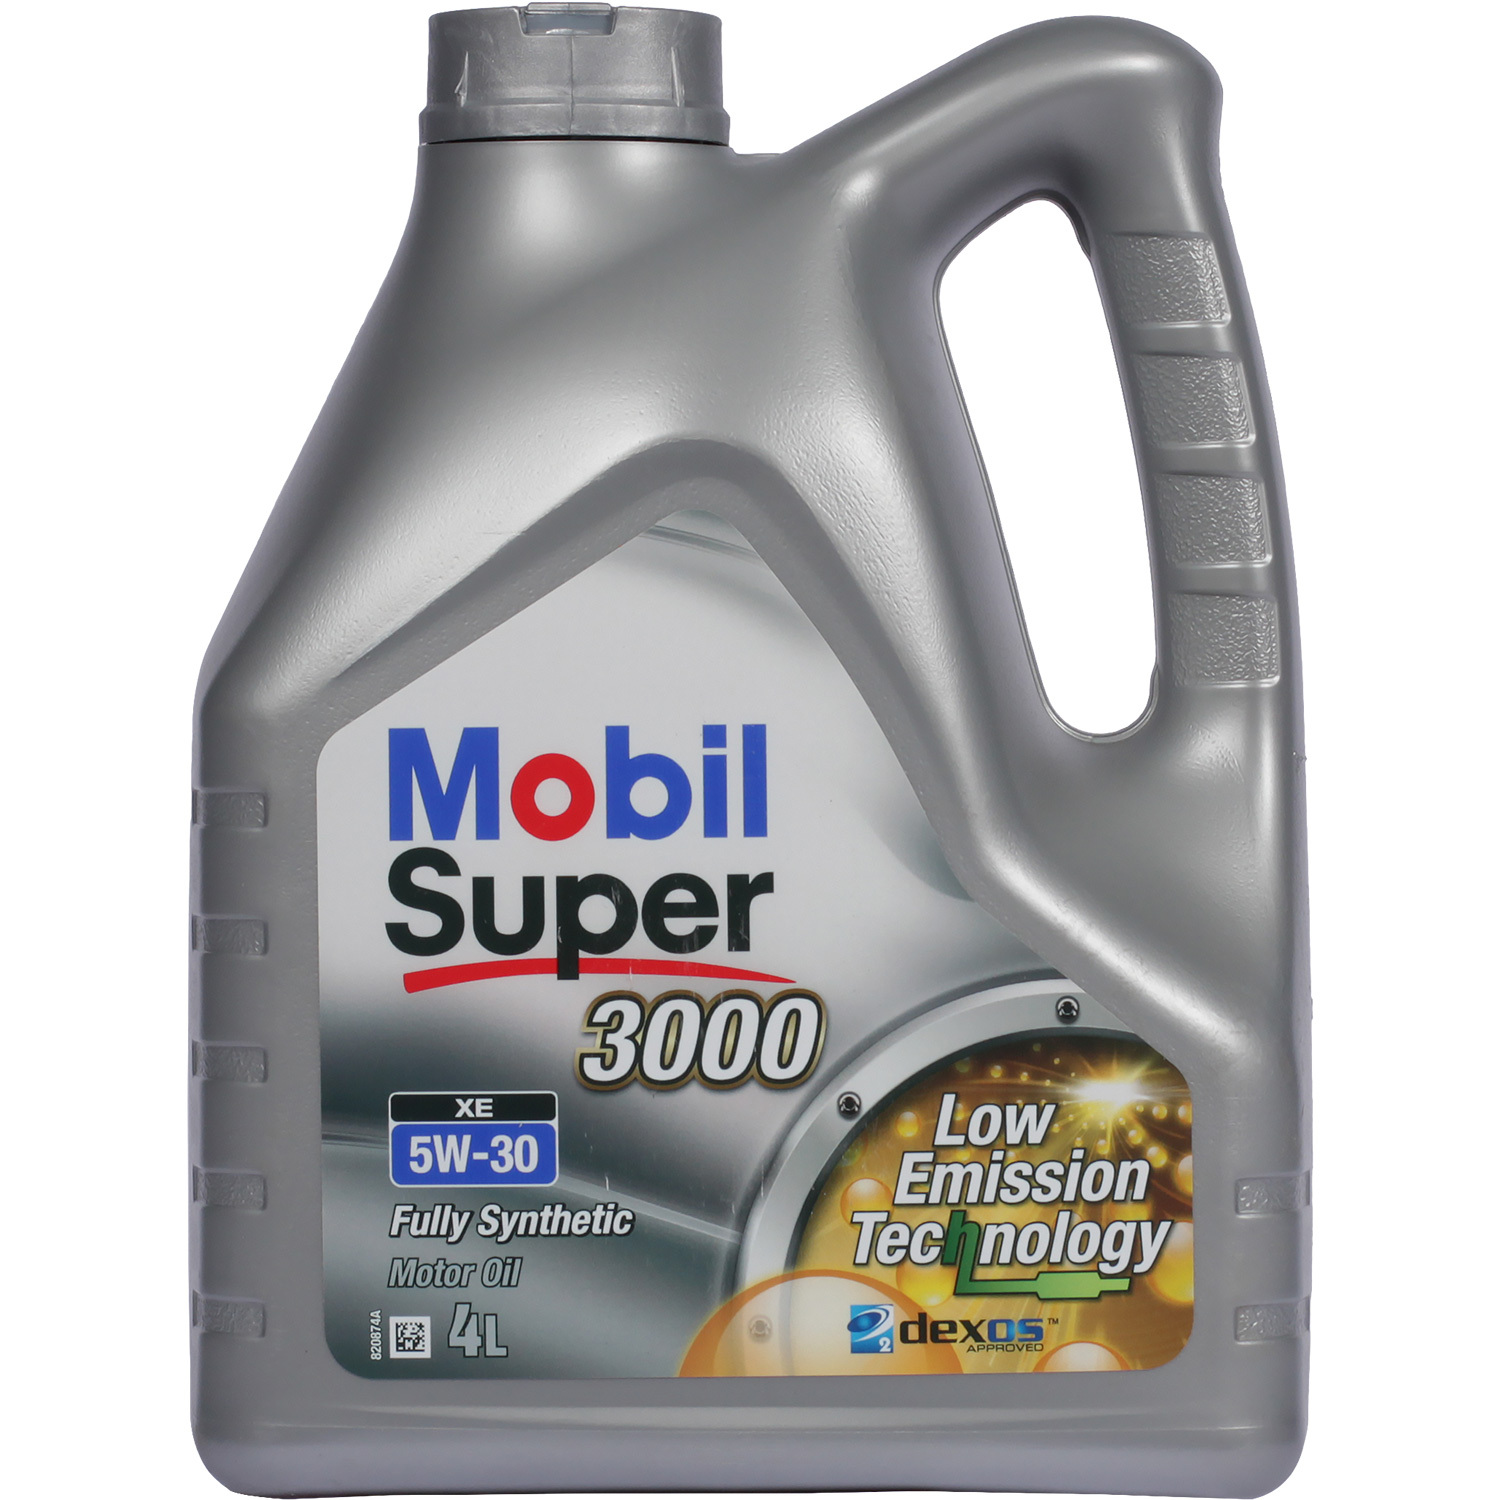 Mobil Моторное масло Mobil Super 3000 XE 5W-30, 4 л масло моторное mobil super 3000 xe 5w 30 4 л